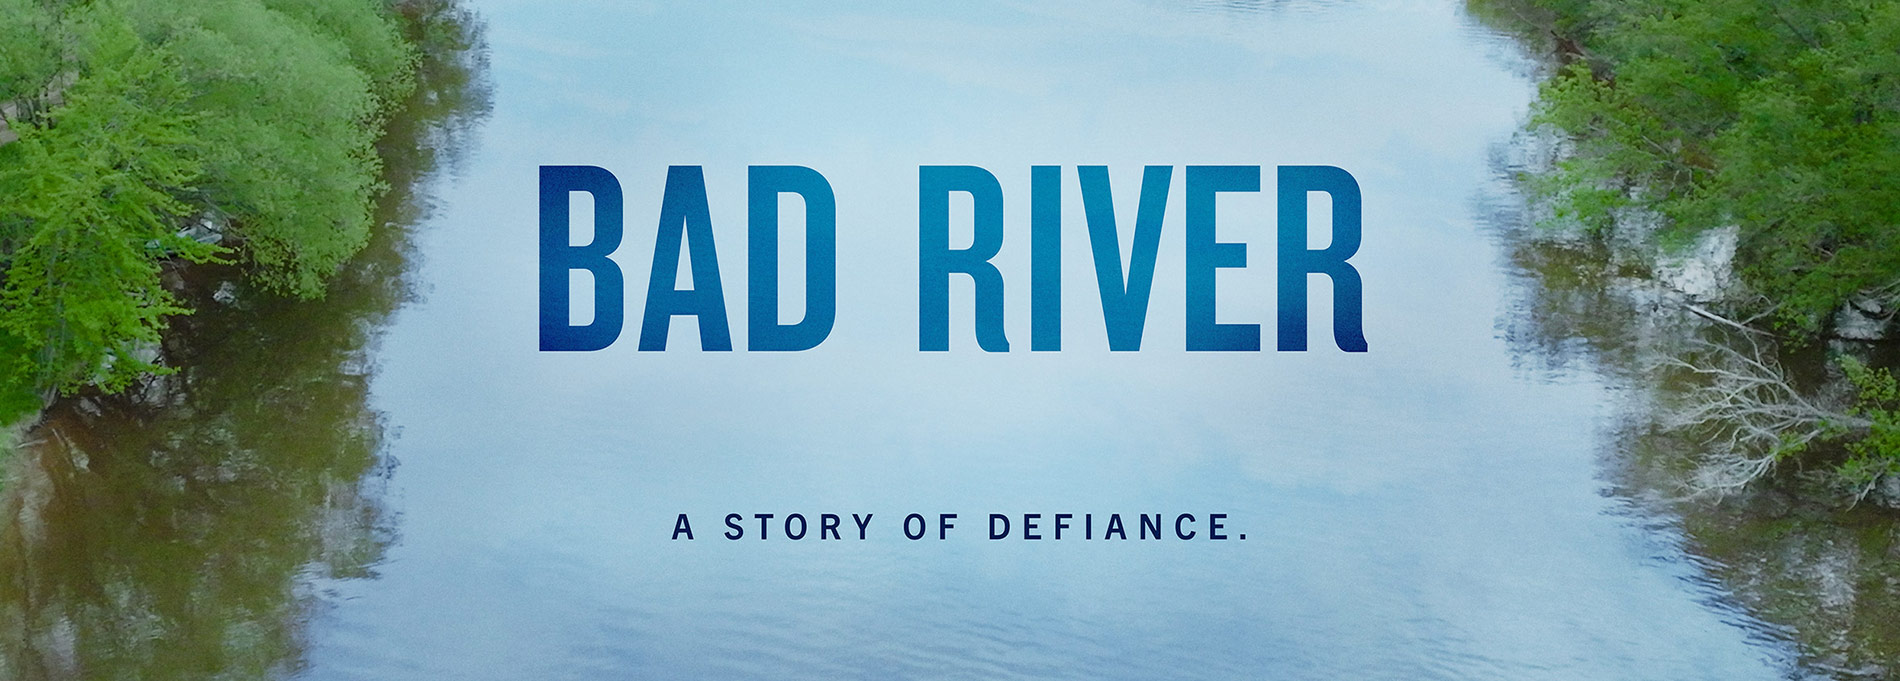 Bad River Film Poster